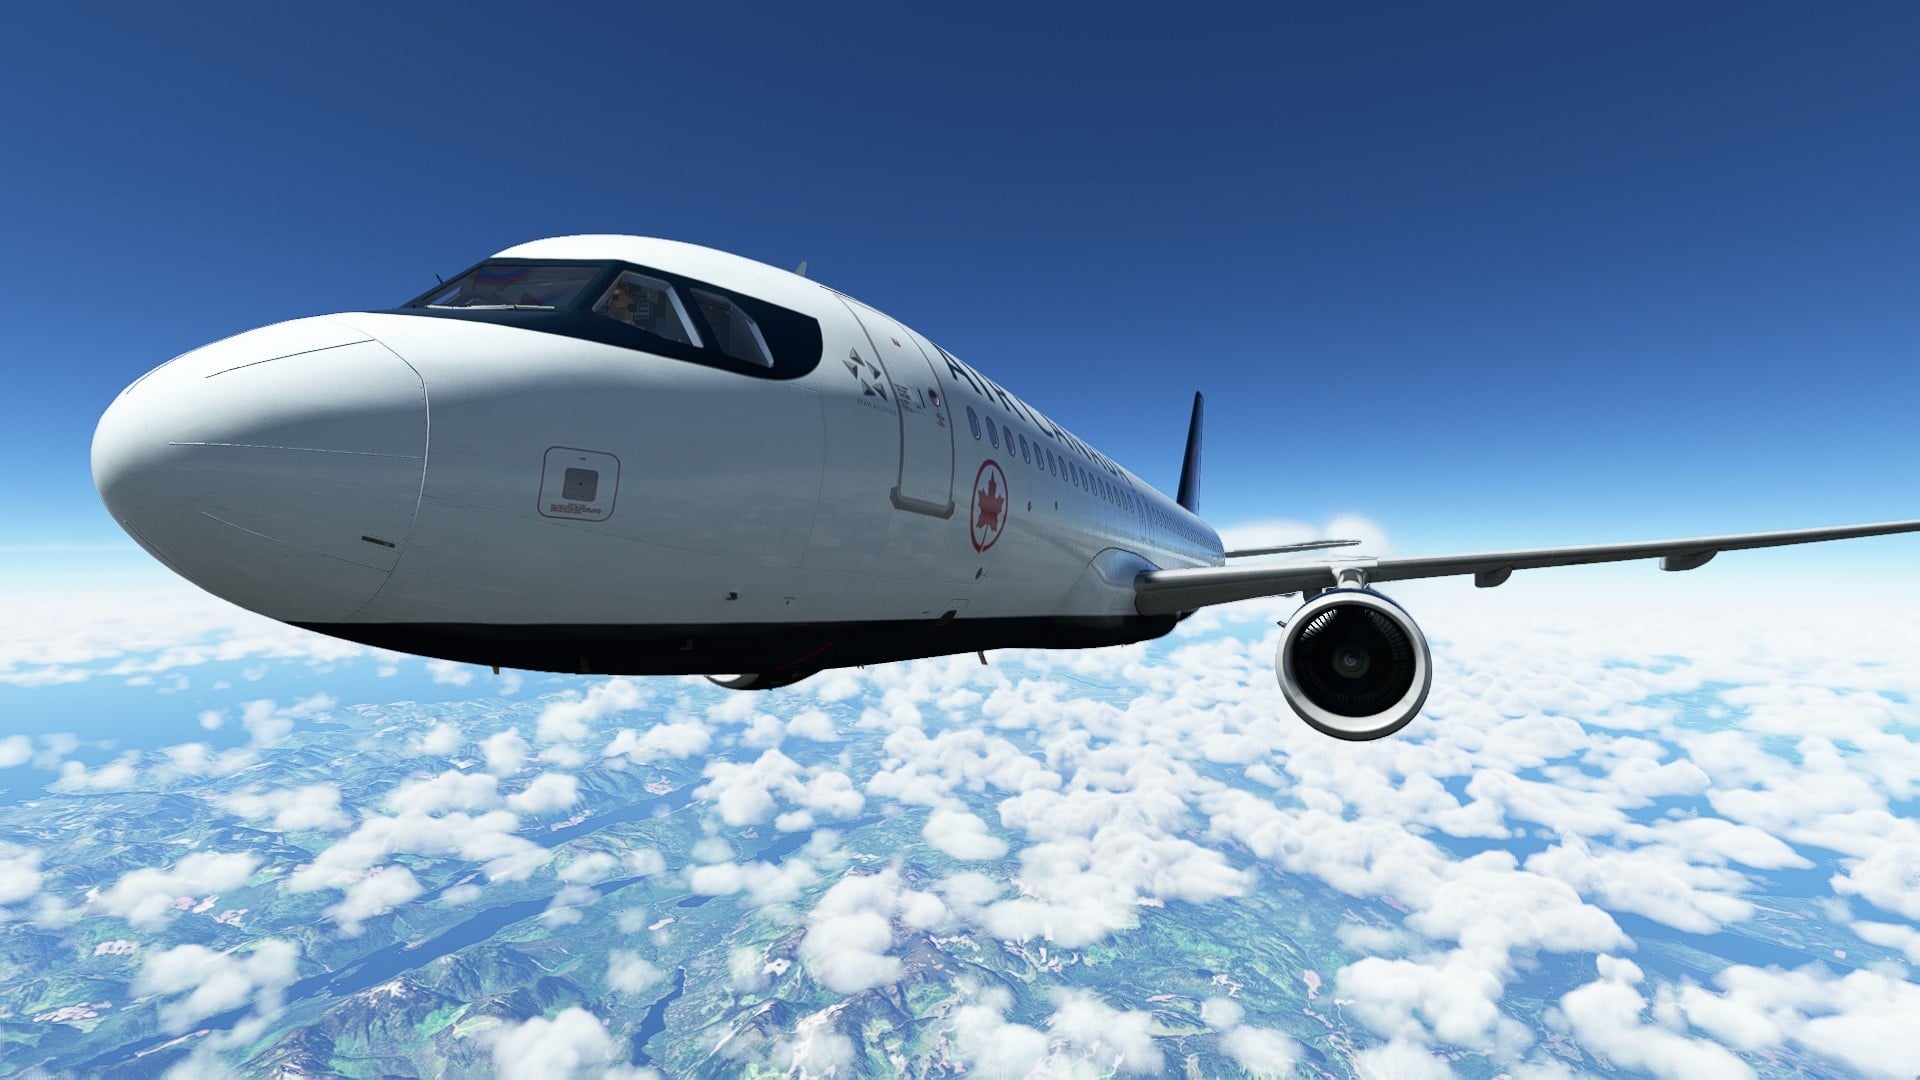 （Fenix A320可能是目前市场上最真实的空客。但要掌握它，你需要做大量的阅读和观看大量的YouTube视频）